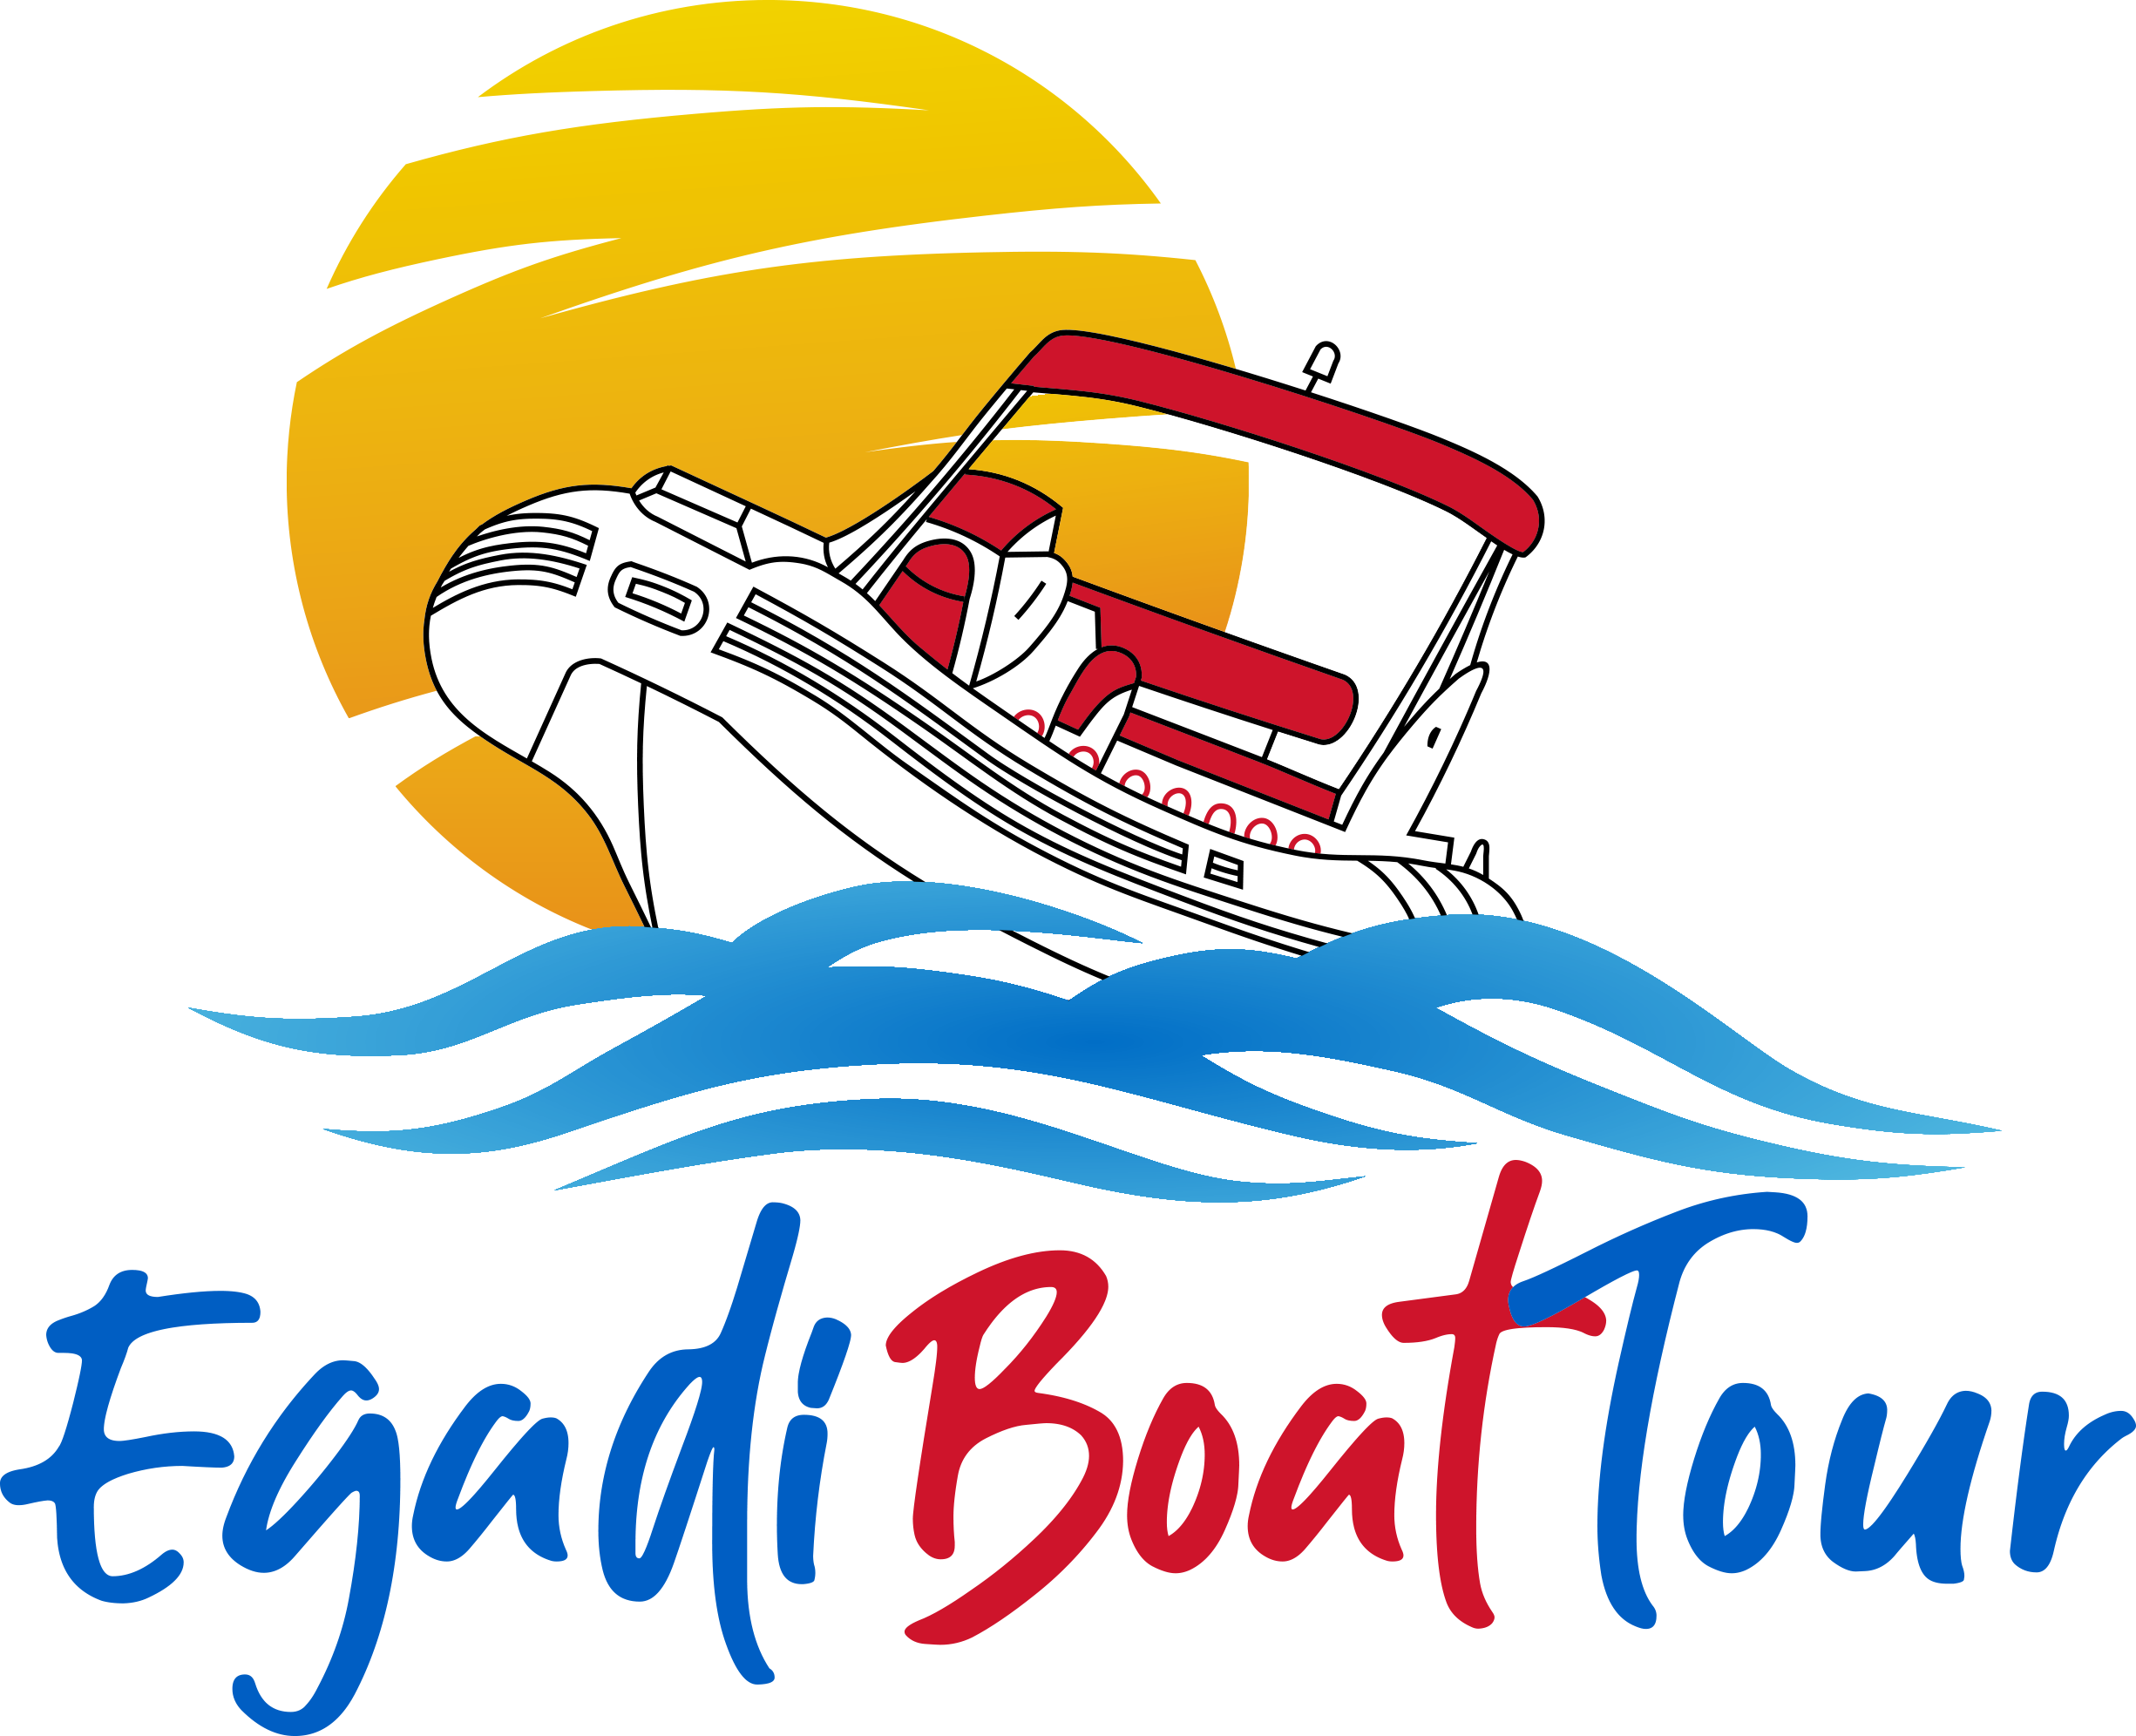 Egadi Boat Tour